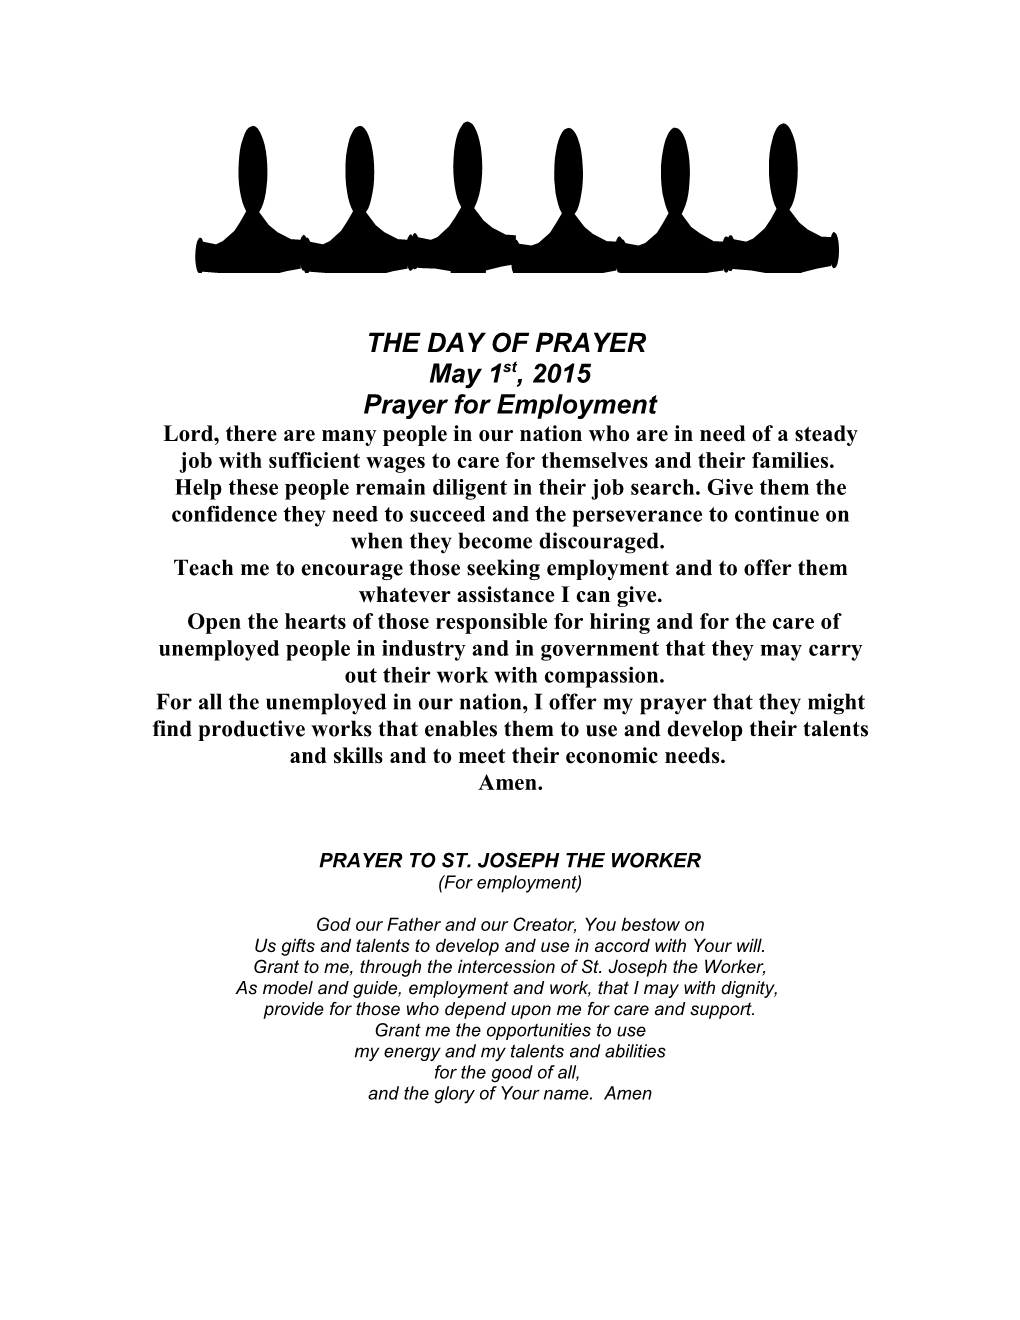 The Day of Prayer